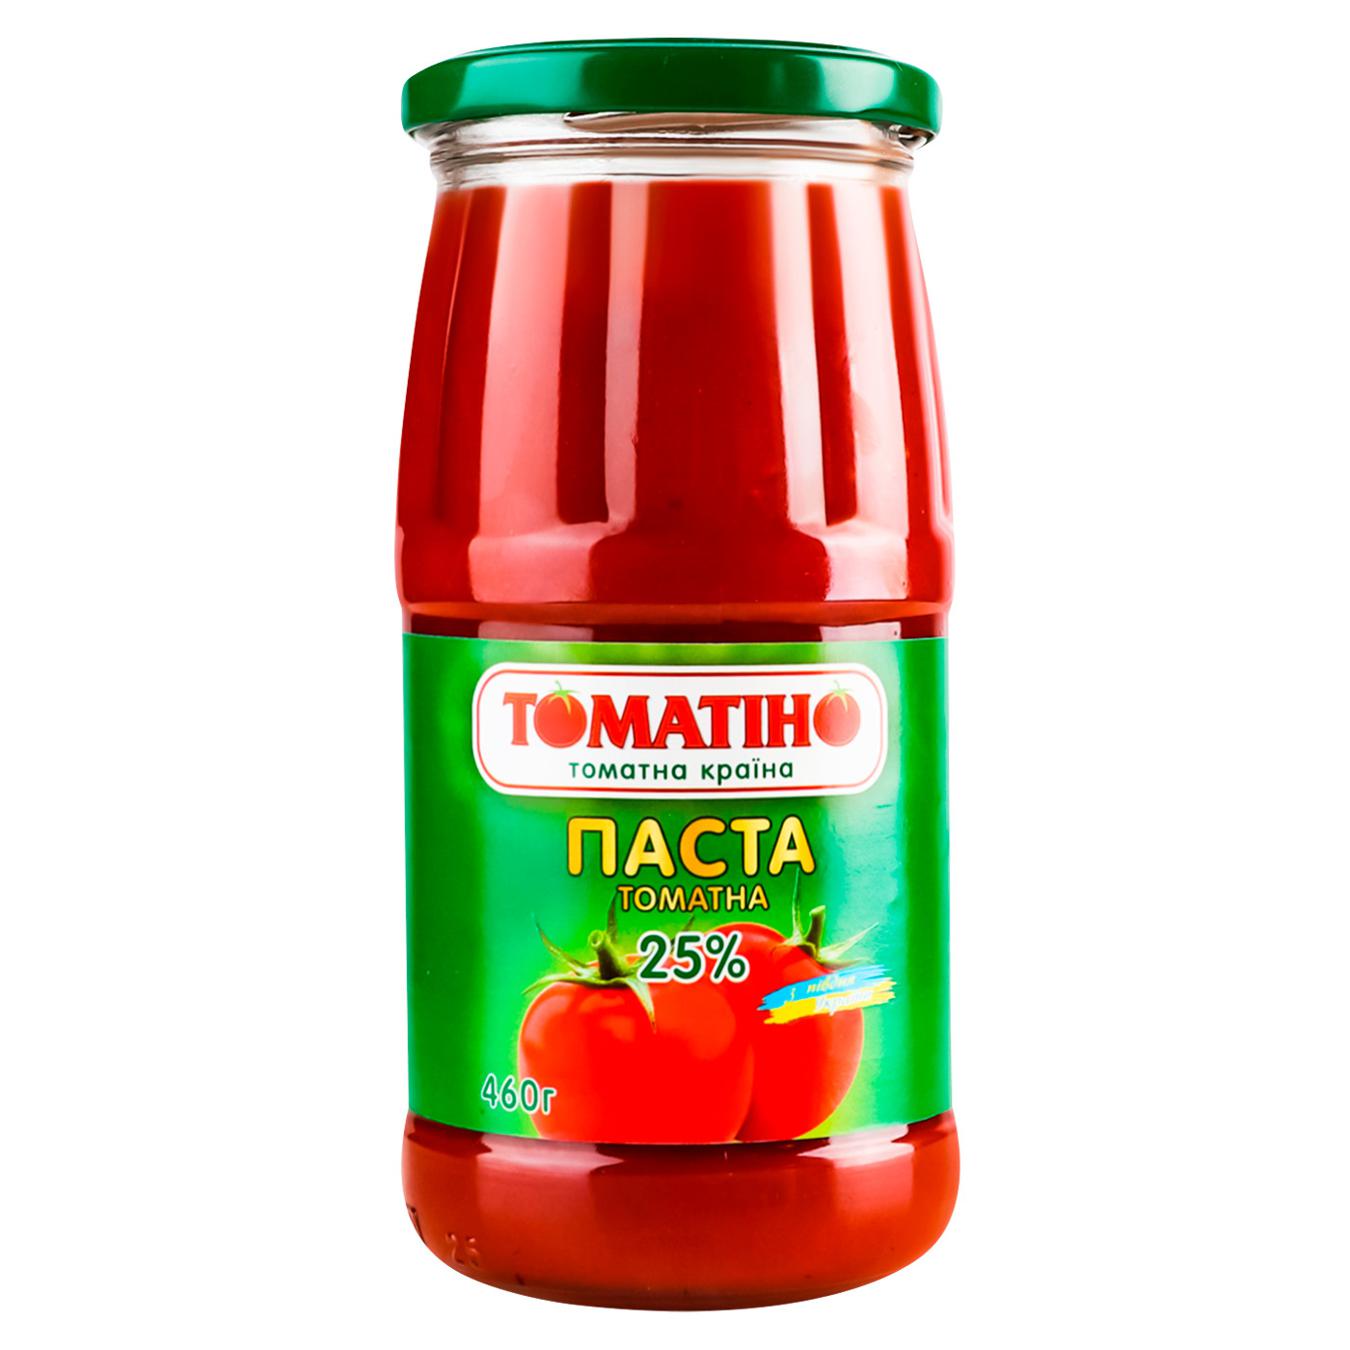 Tomato paste Томатино 25% glass 460g